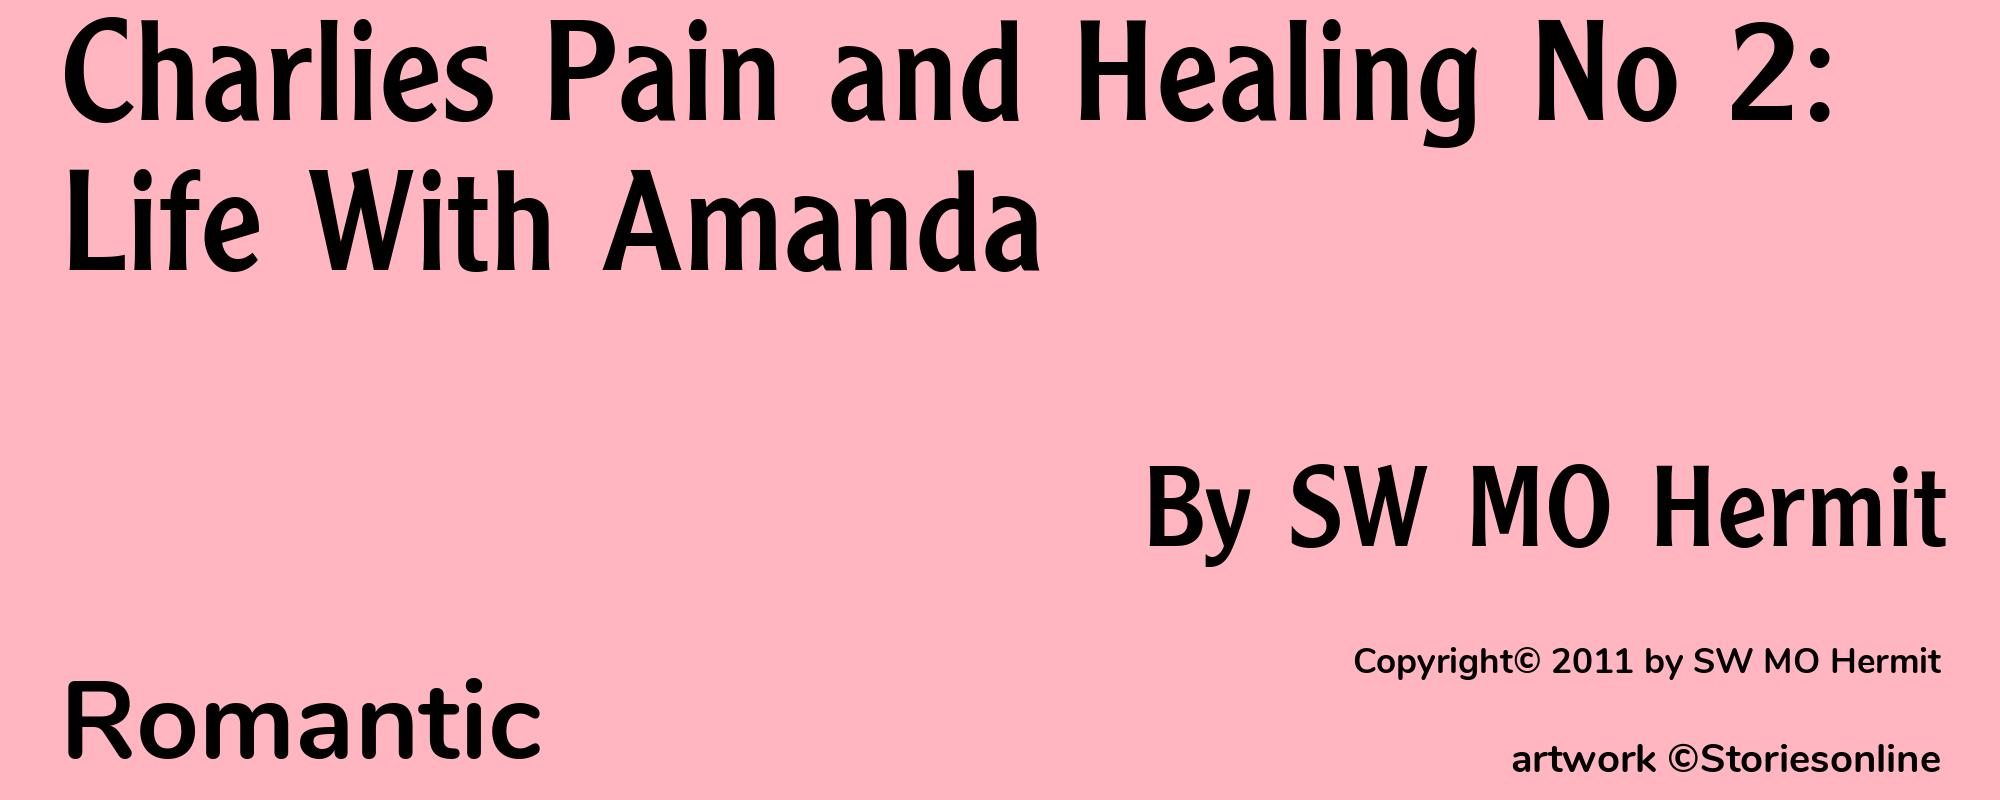 Charlies Pain and Healing No 2: Life With Amanda - Cover